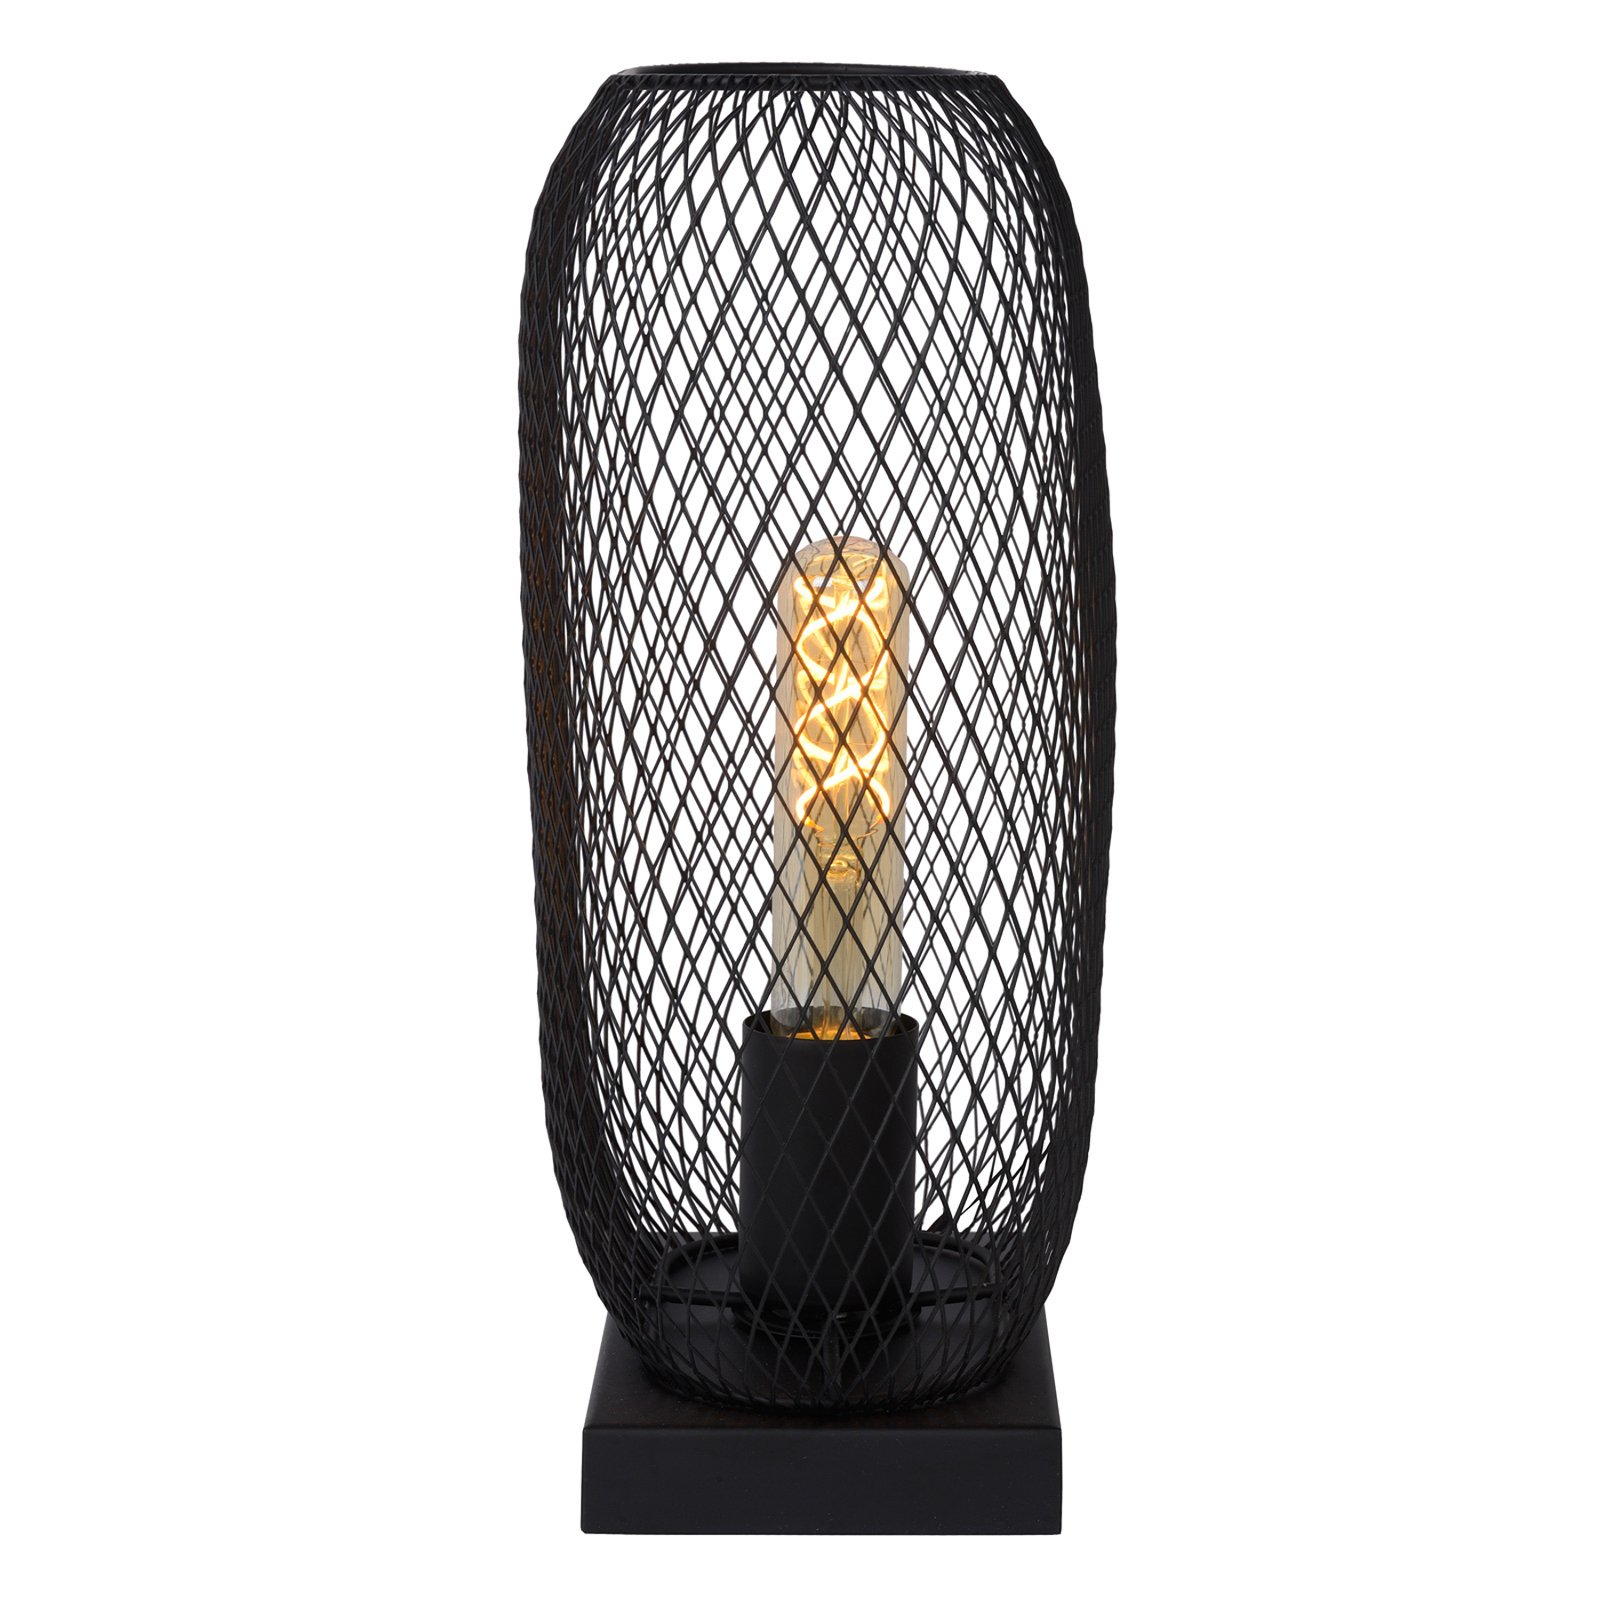 Bordslampa i mesh, oval, höjd 32,5 cm